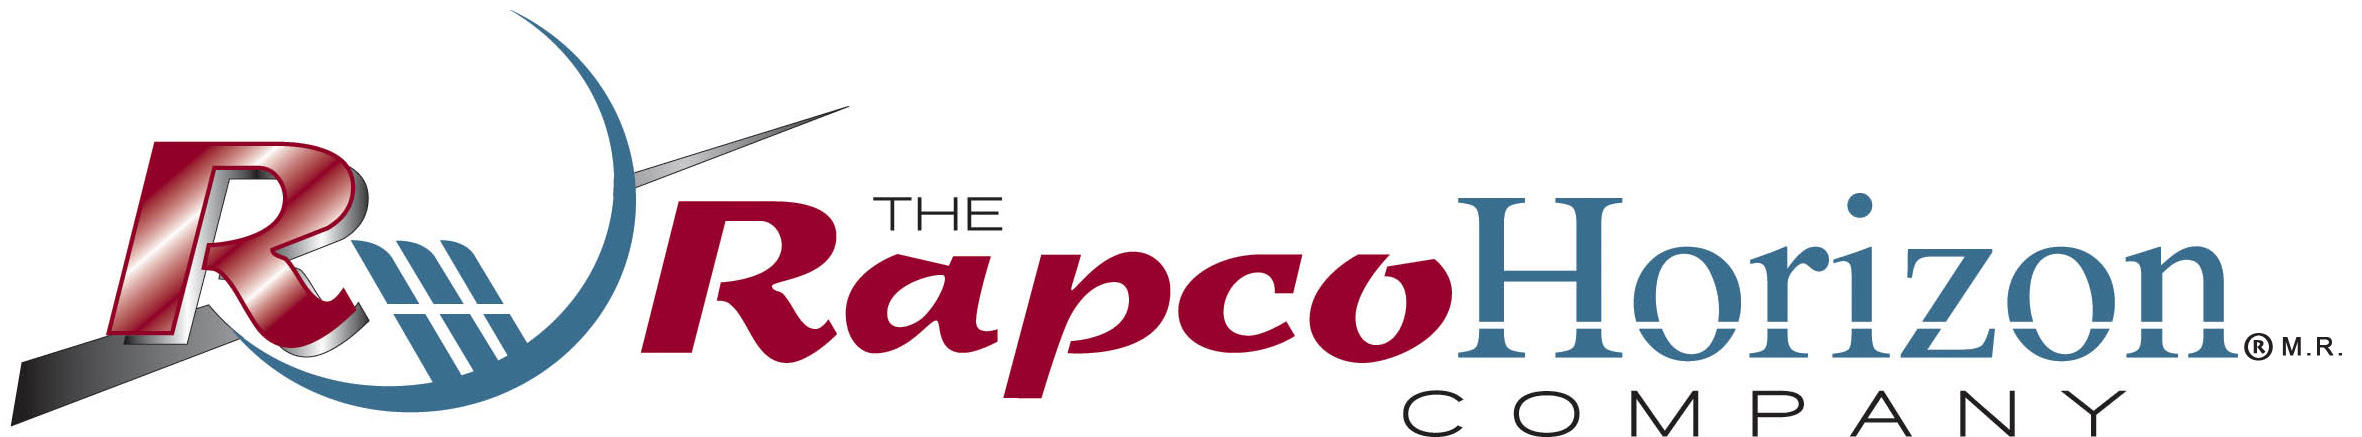 RapcoHorizon_logo.jpg